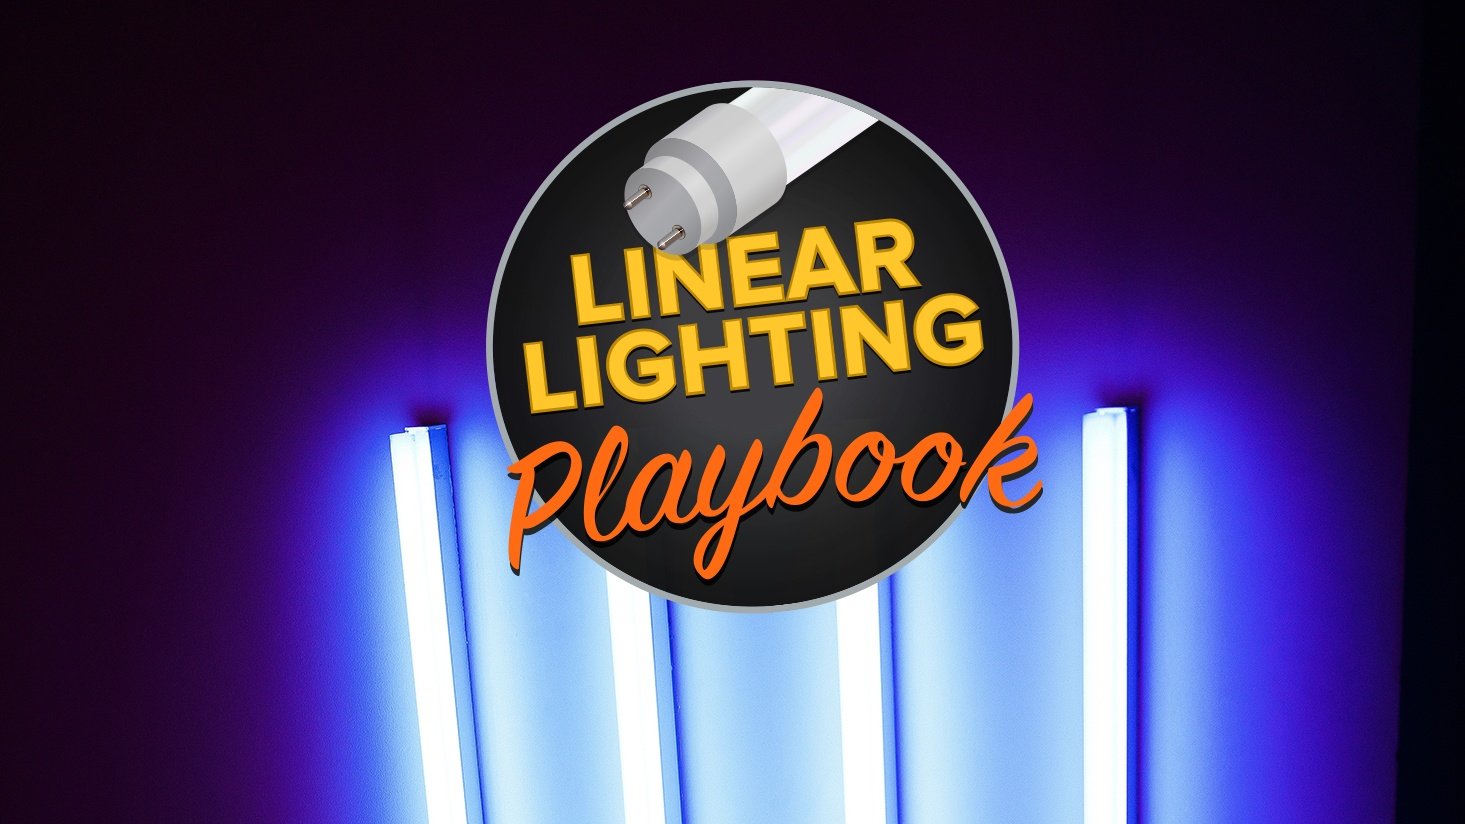 Linear-lighting-fluorescent-LED-playbook.jpg